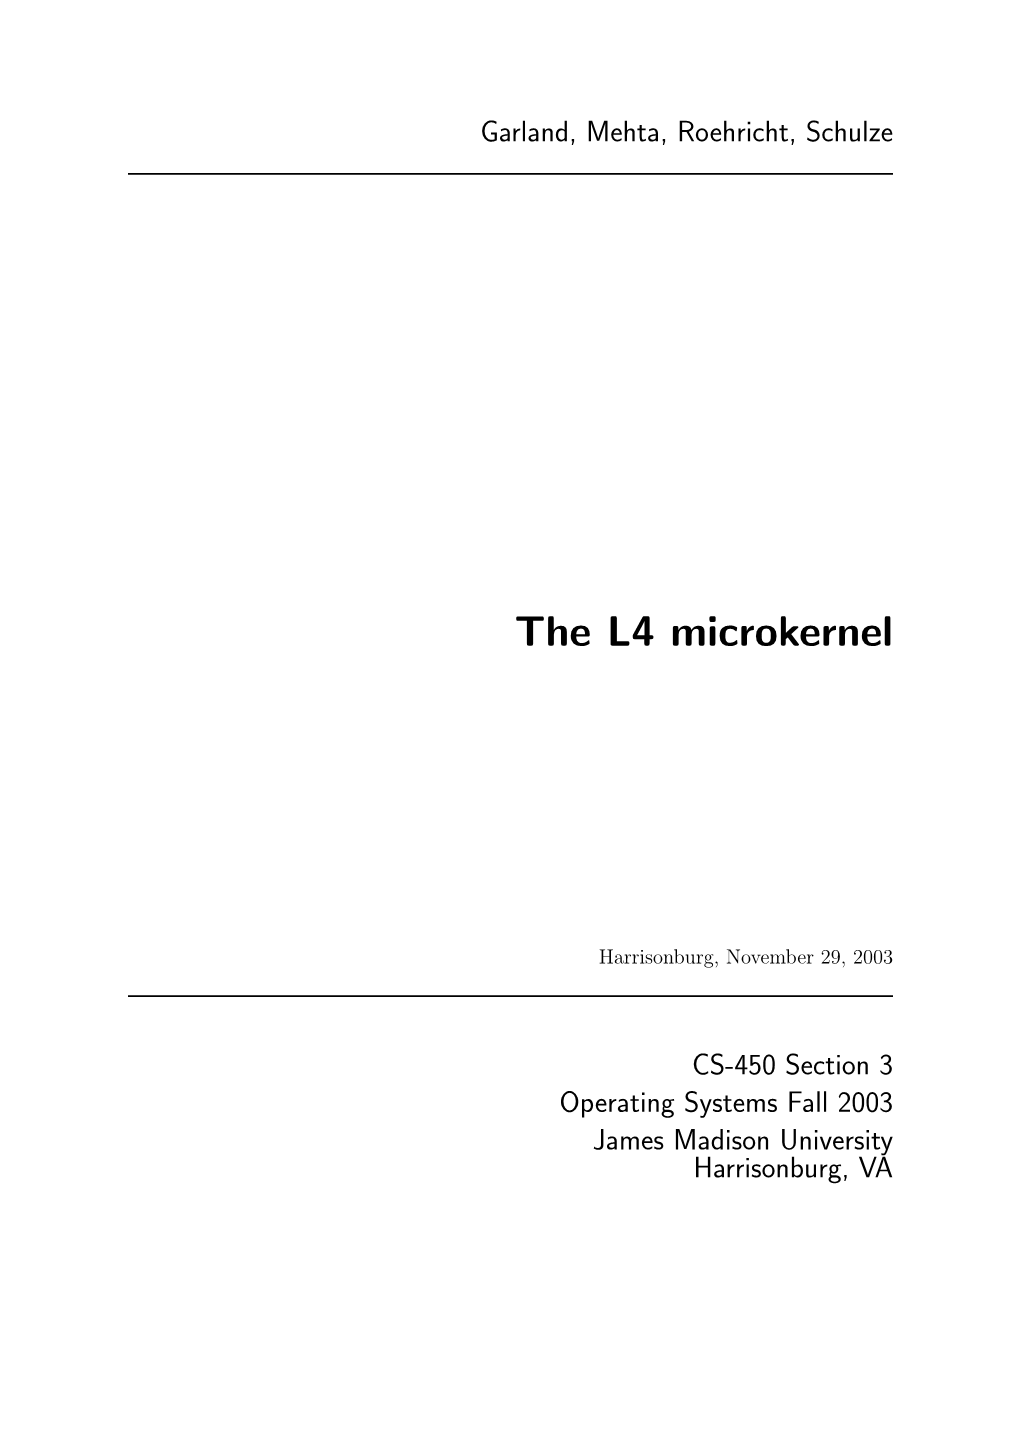 The L4 Microkernel